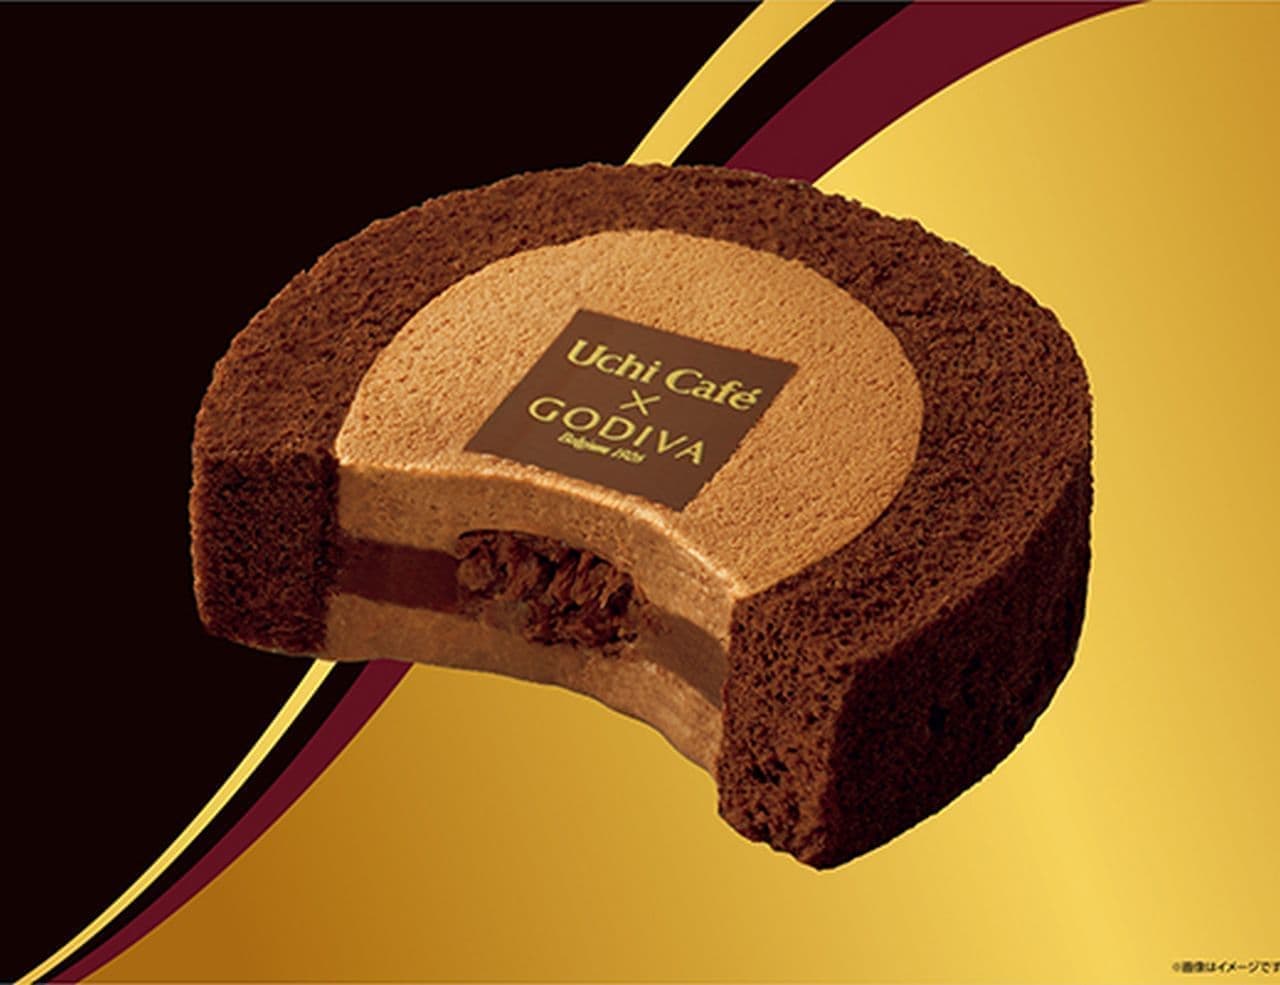 LAWSON "Uchi Cafe×GODIVA Chocolat Roll Cake - with Fiantine (crunchy texture)